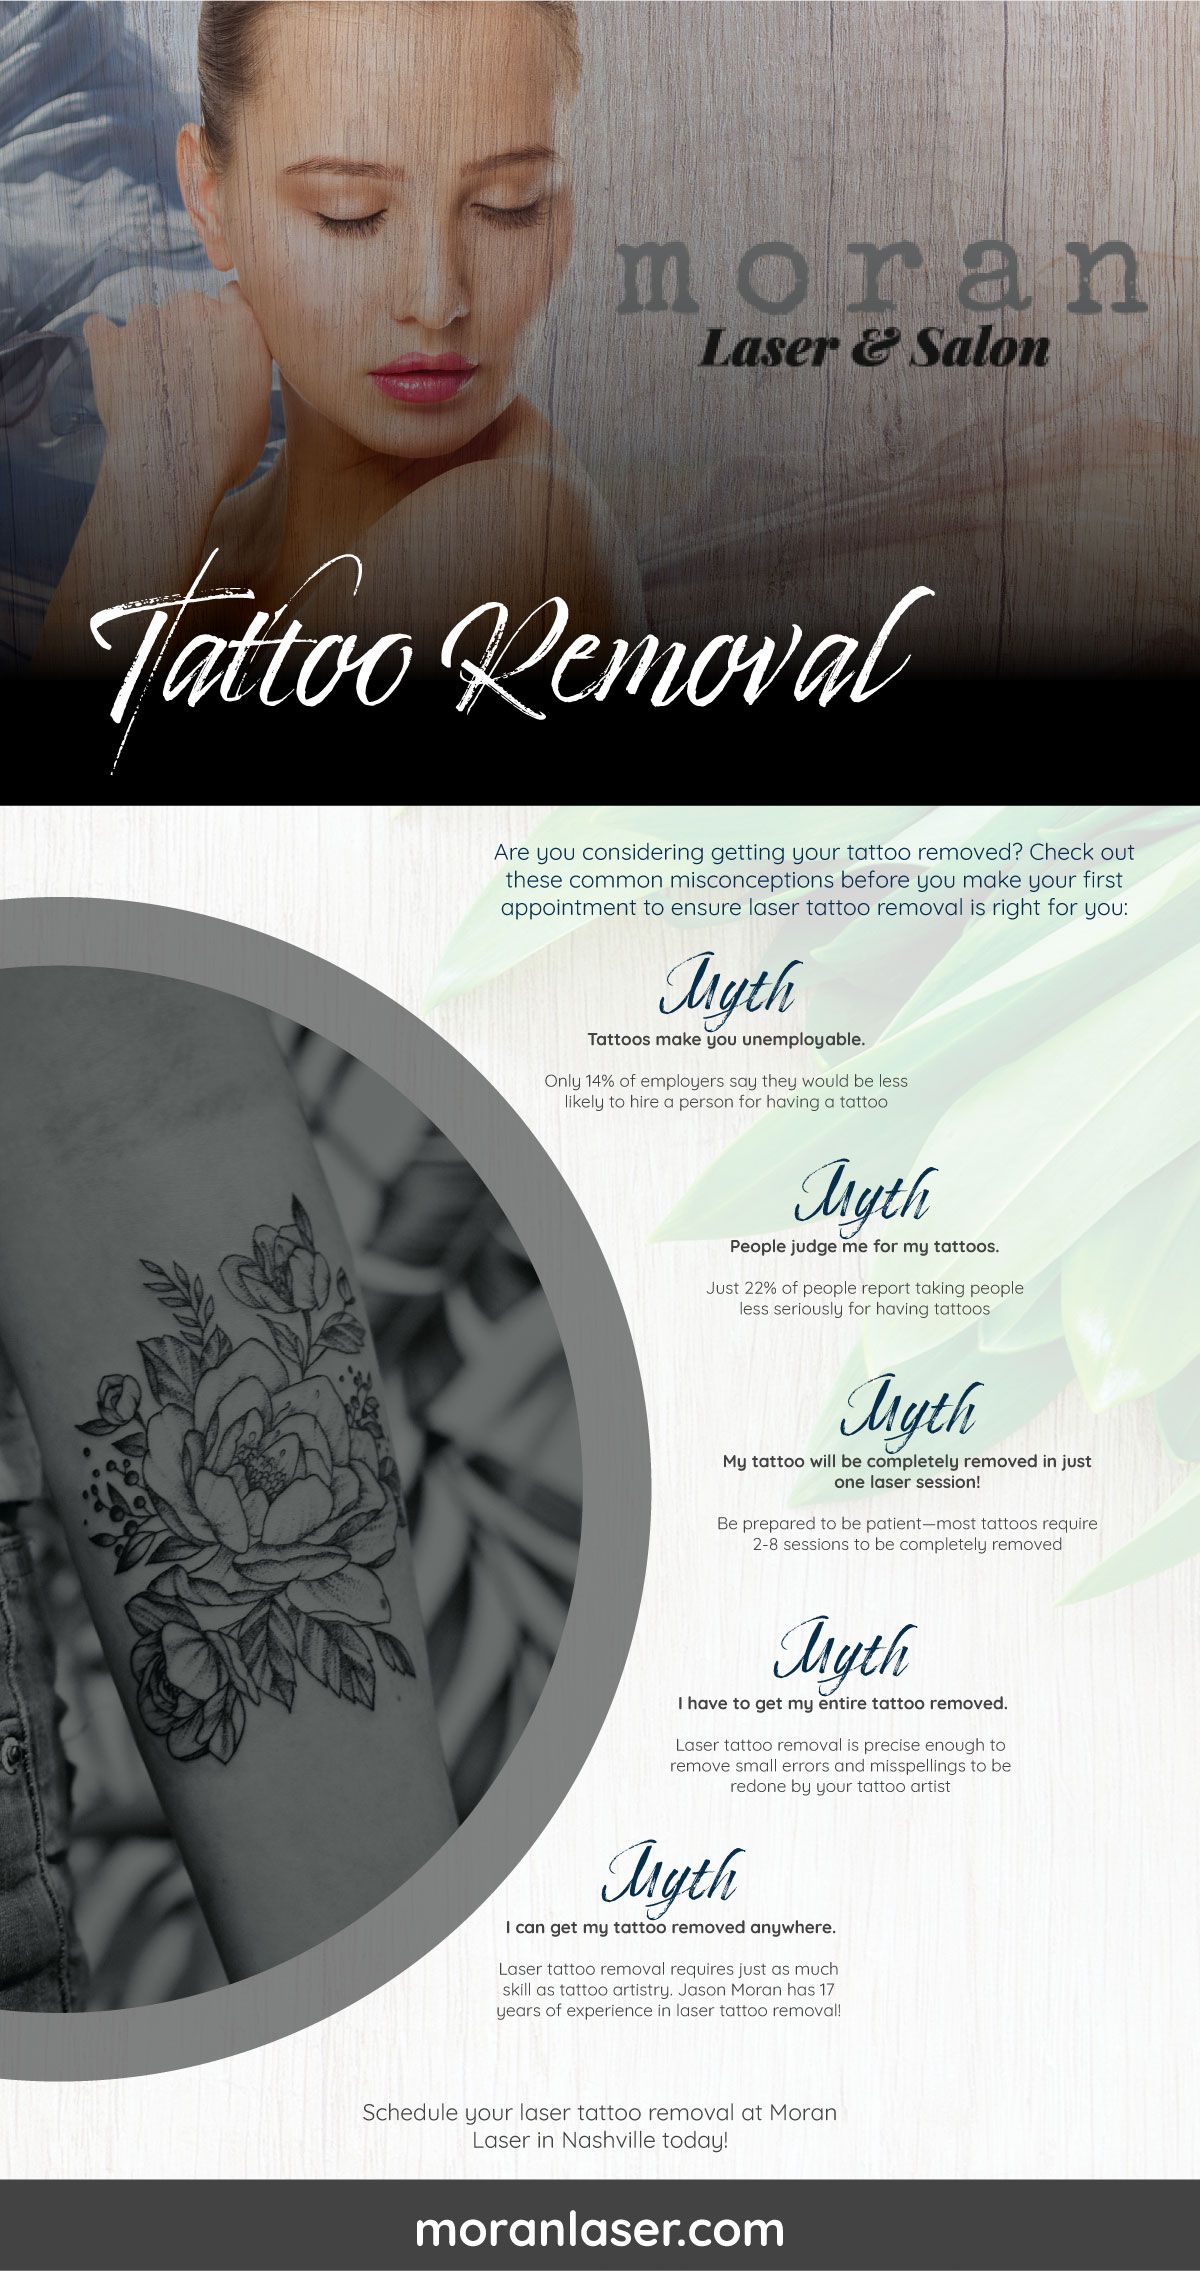 Tattoo-removal-605cf7e26040a.jpg